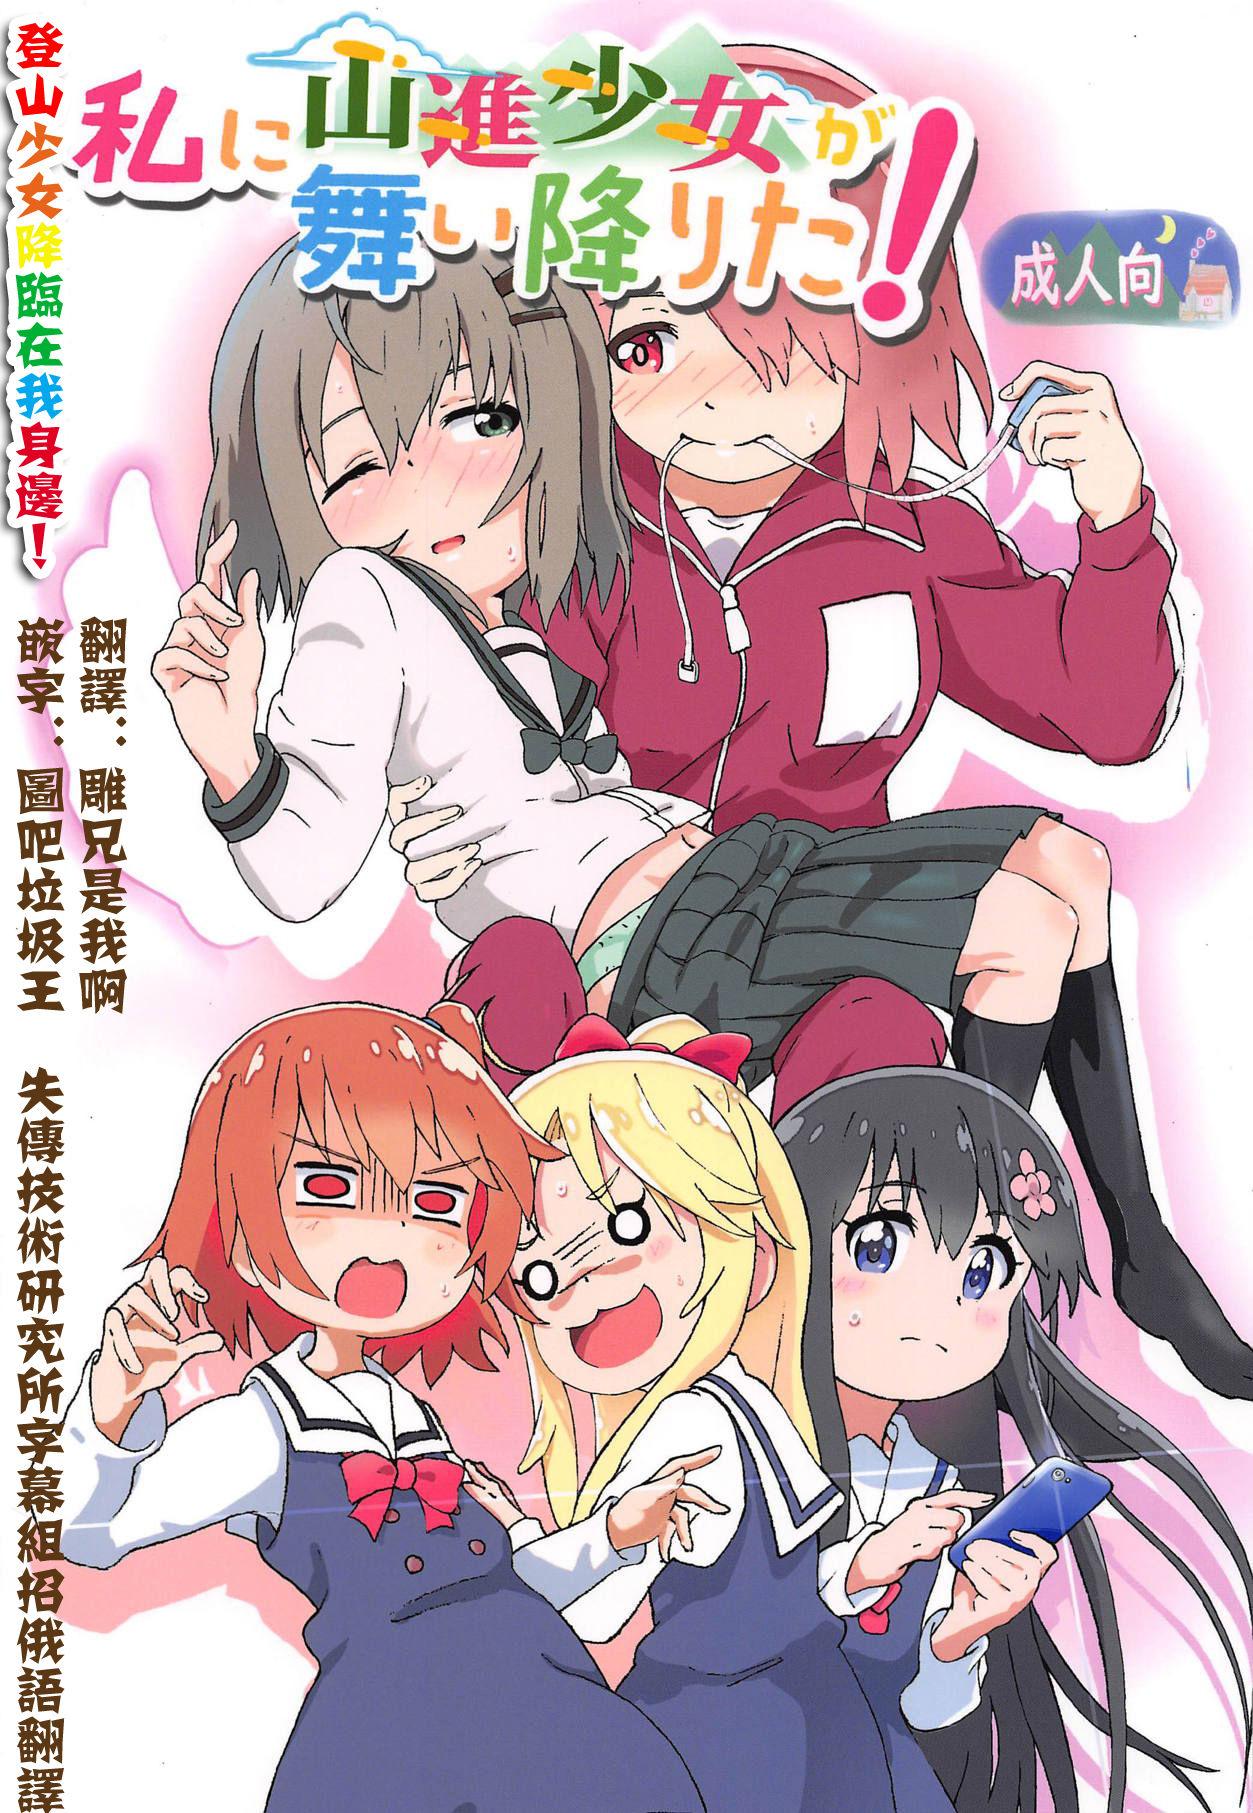 White Chick Watashi ni Yama Susume Shoujo ga Maiorita! - Watashi ni tenshi ga maiorita Yama no susume Pussy Licking - Picture 1